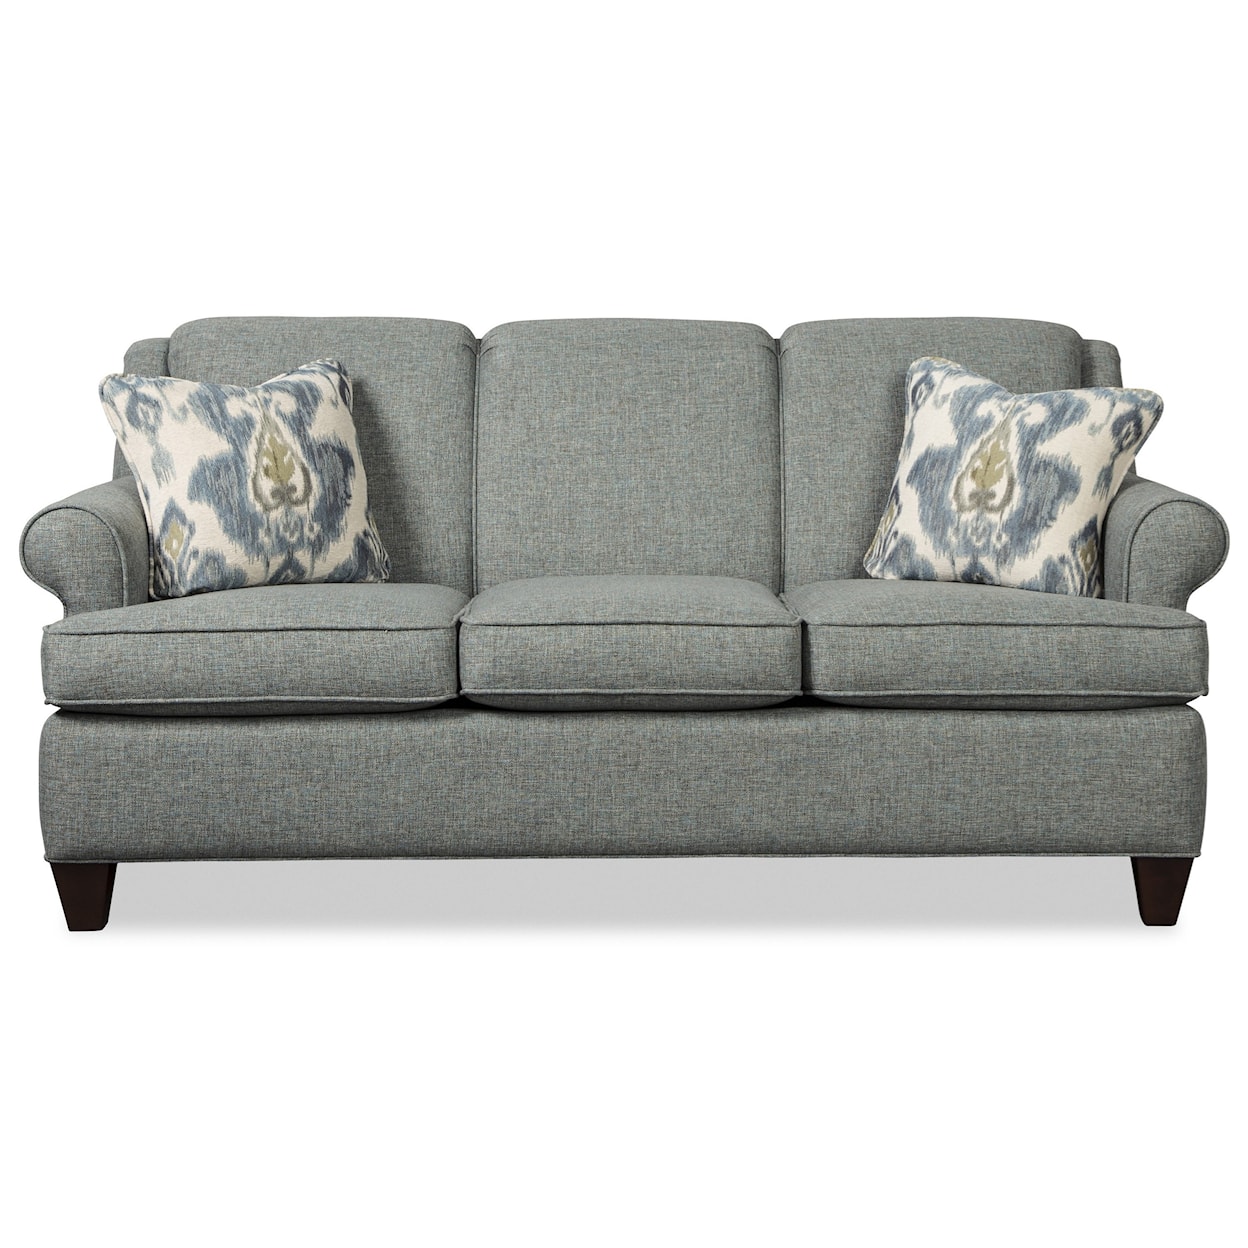 Hickory Craft 781850 Full Size Sleeper Sofa w/ MemFoam Mattress